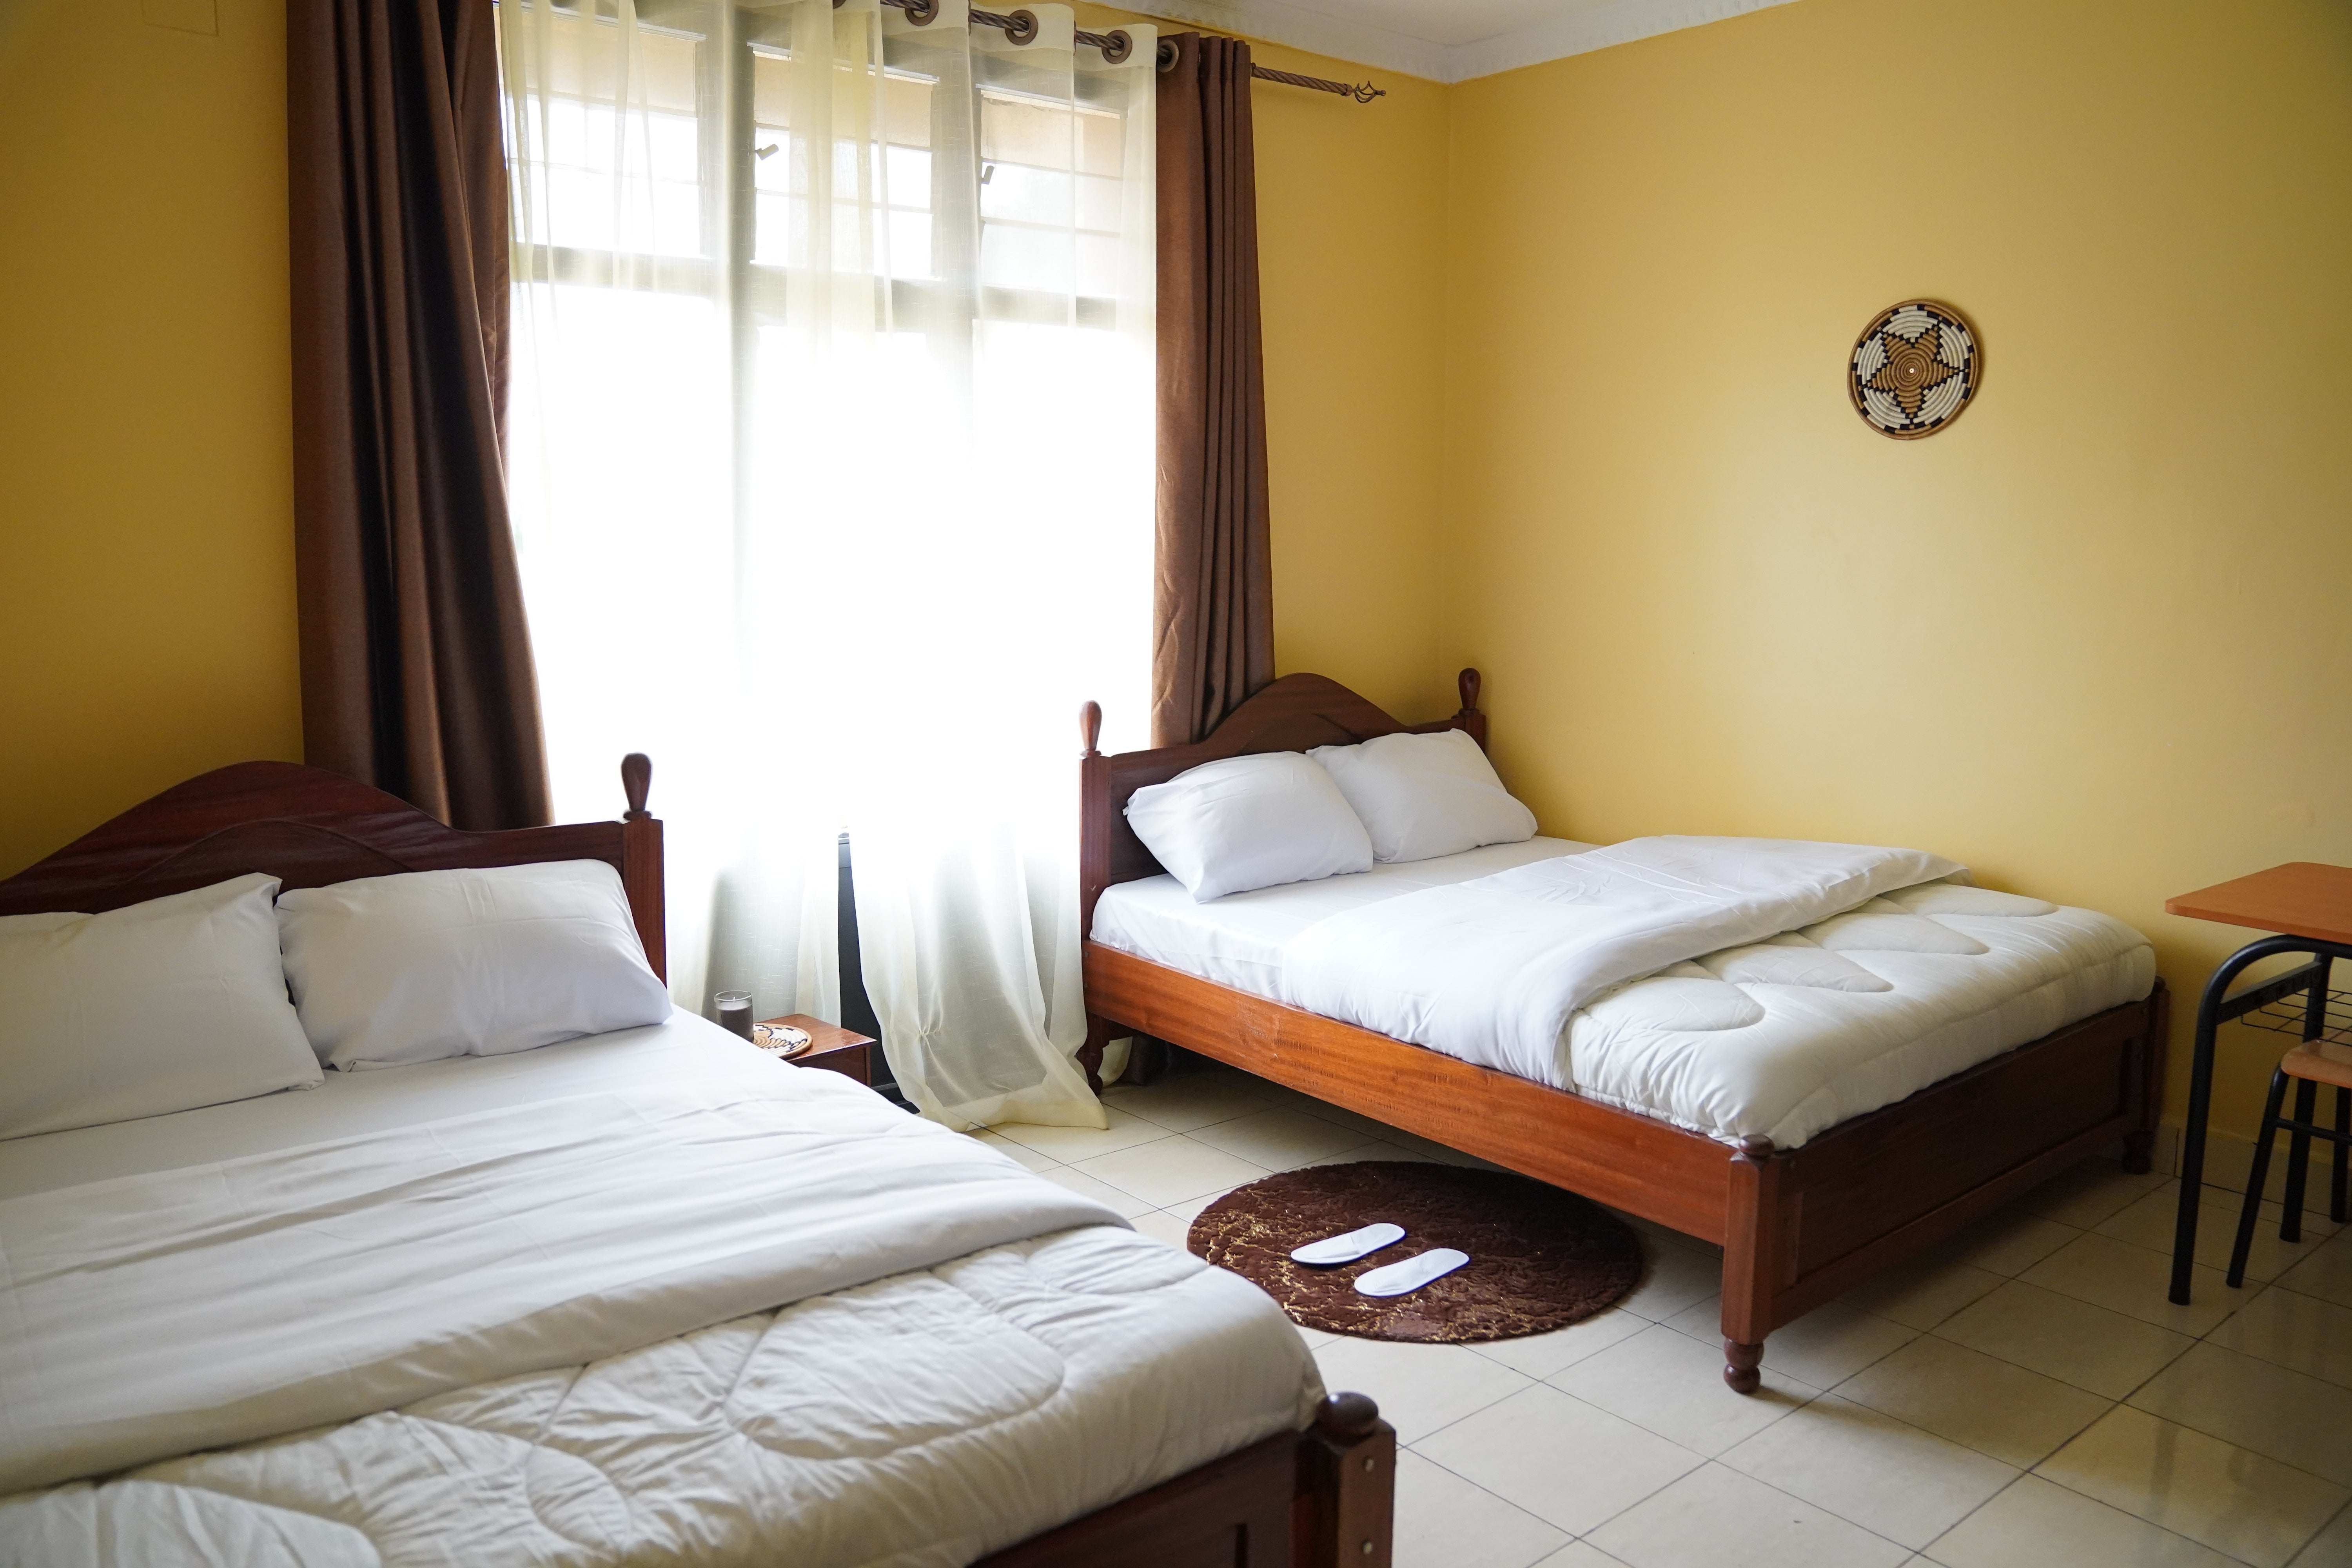 A room at Hope House, a hostel in Rwandan capital city Kigali